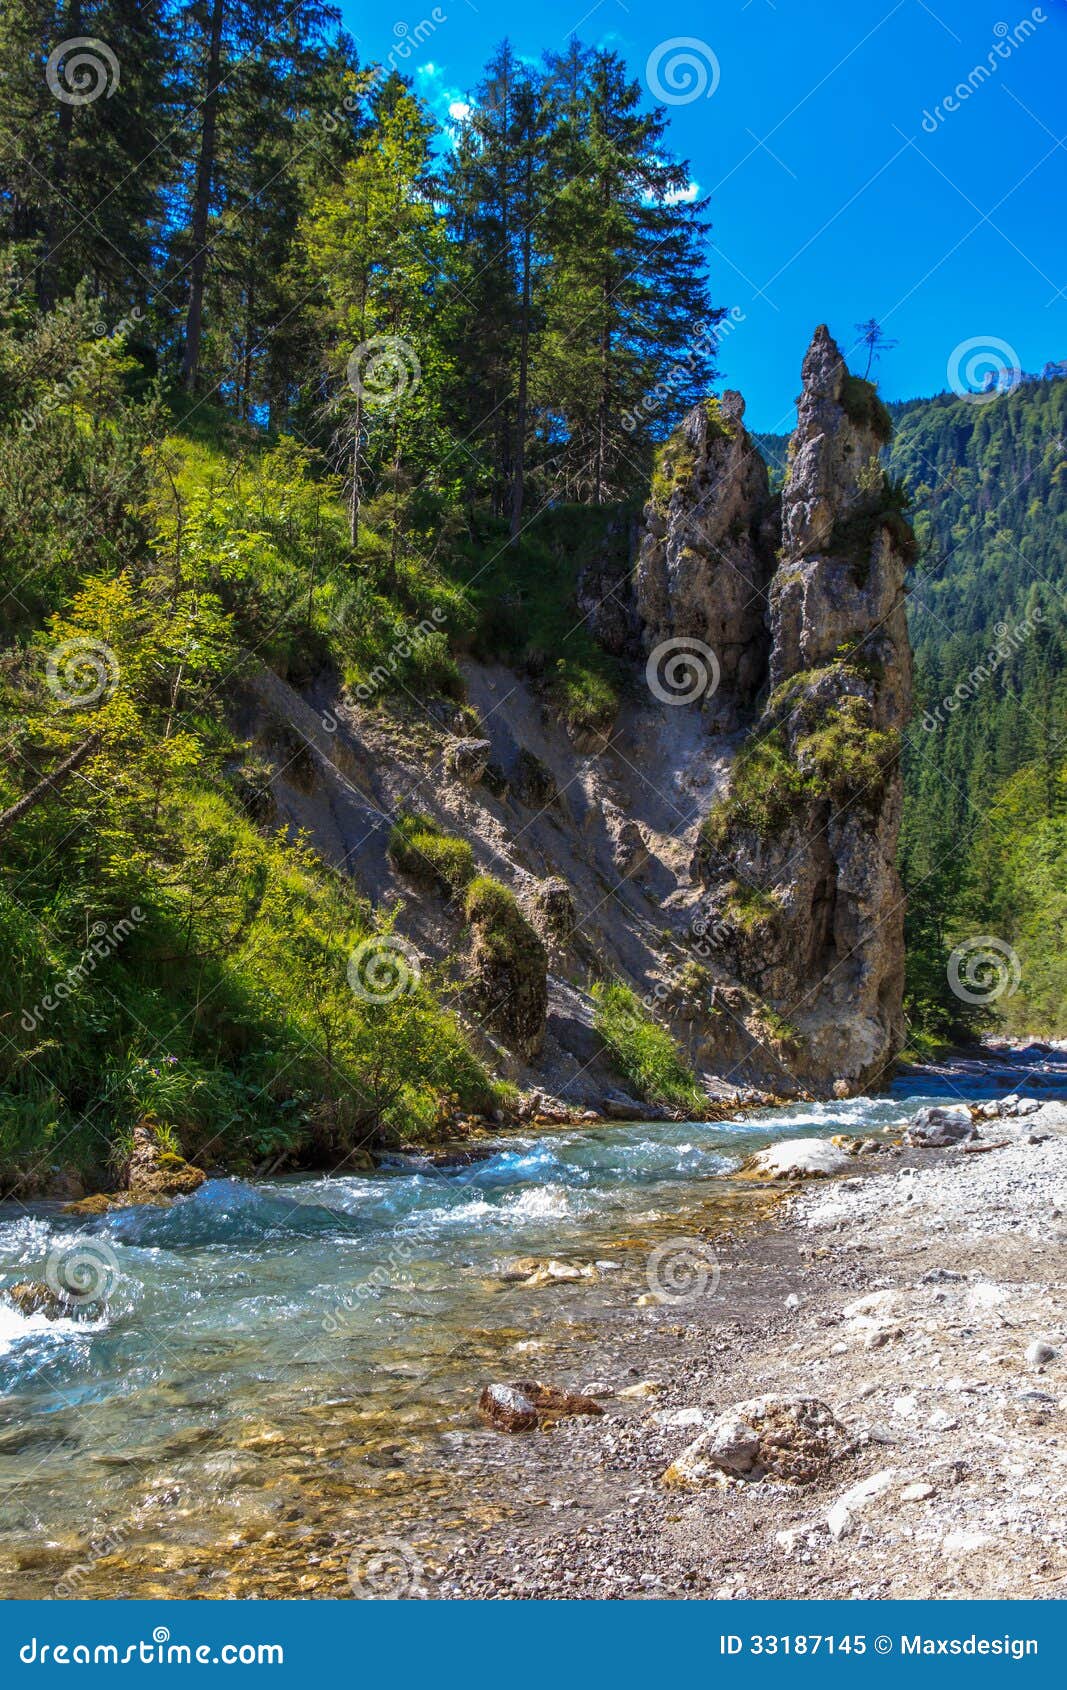 mountains, rocks and river - reserve nationalpark berchtesgaden, bavaria, germany